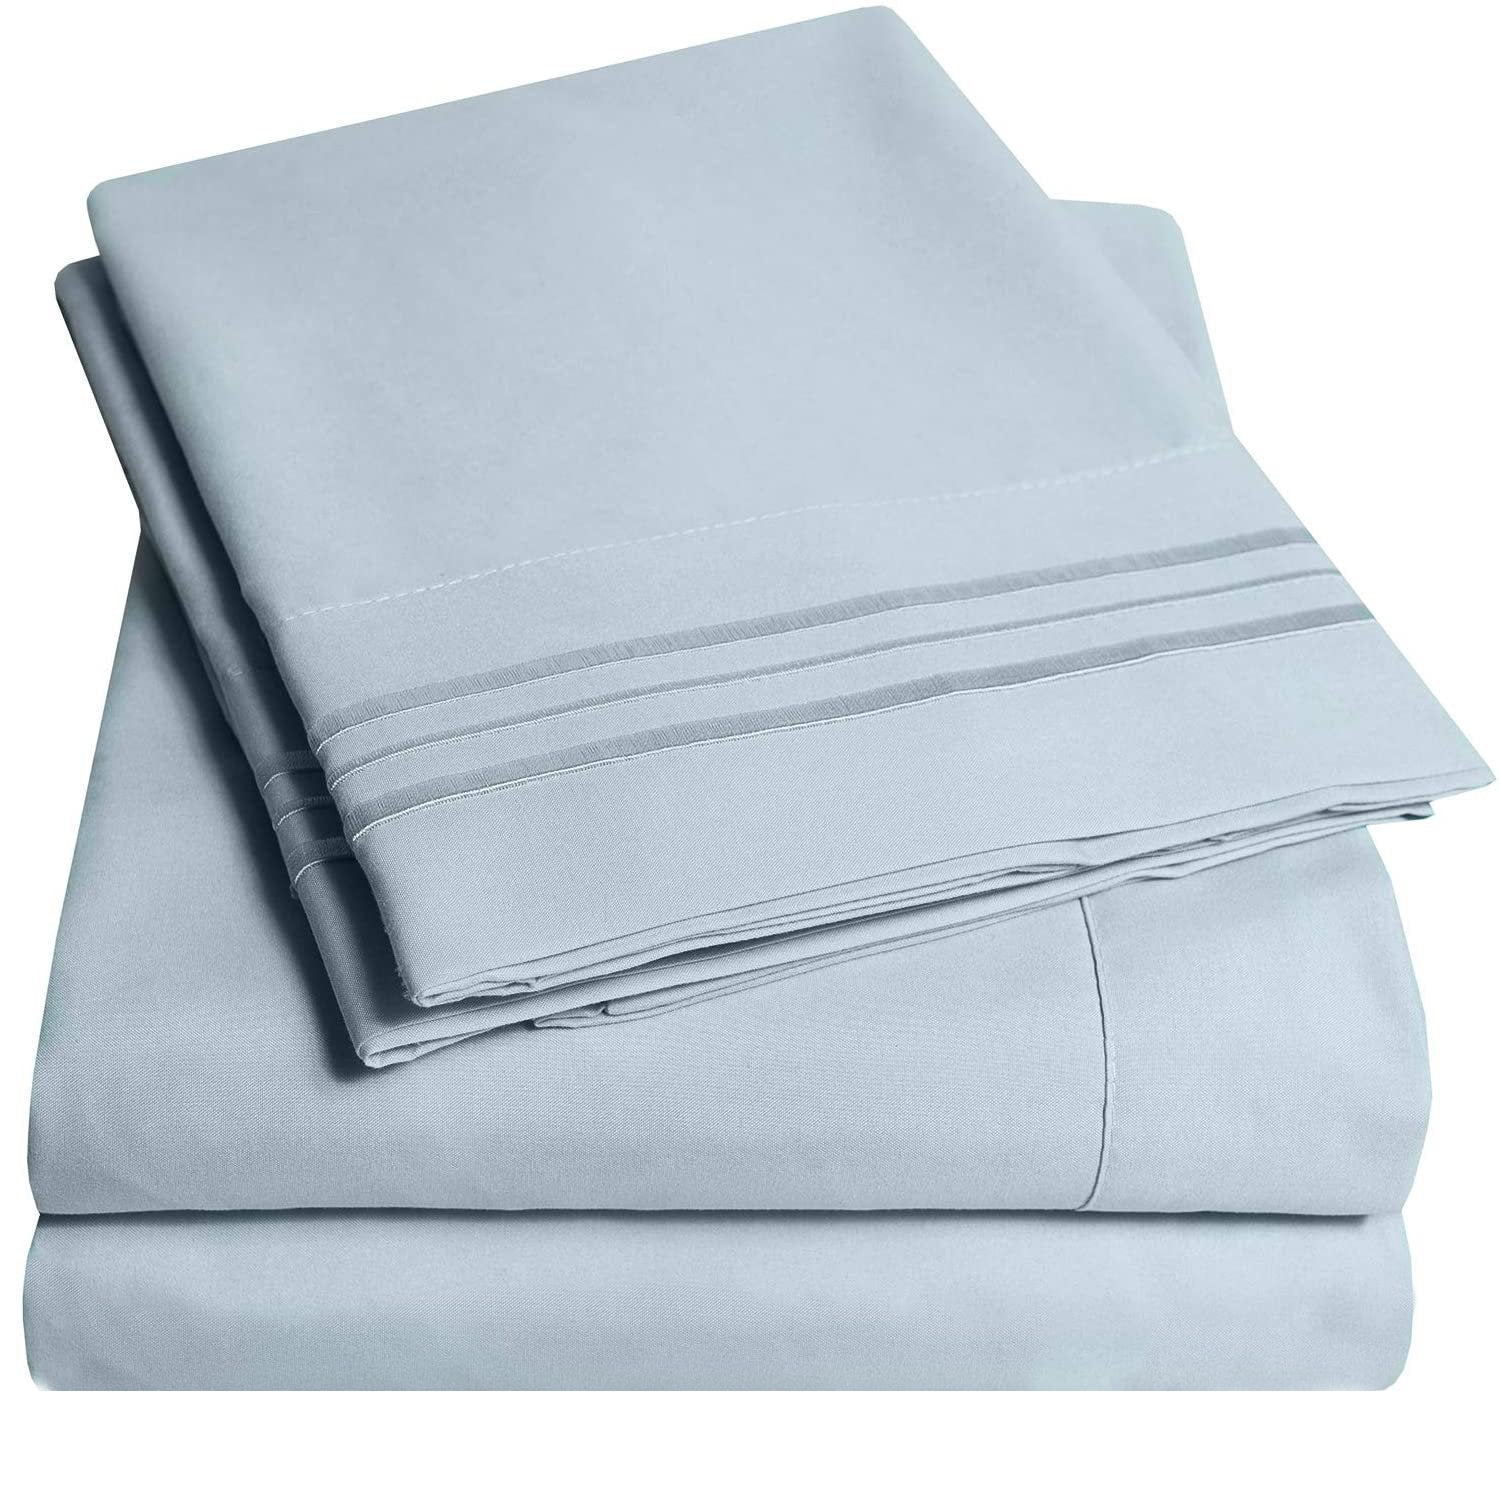 Classic 4-Piece Bed Sheet Set (Misty Blue)